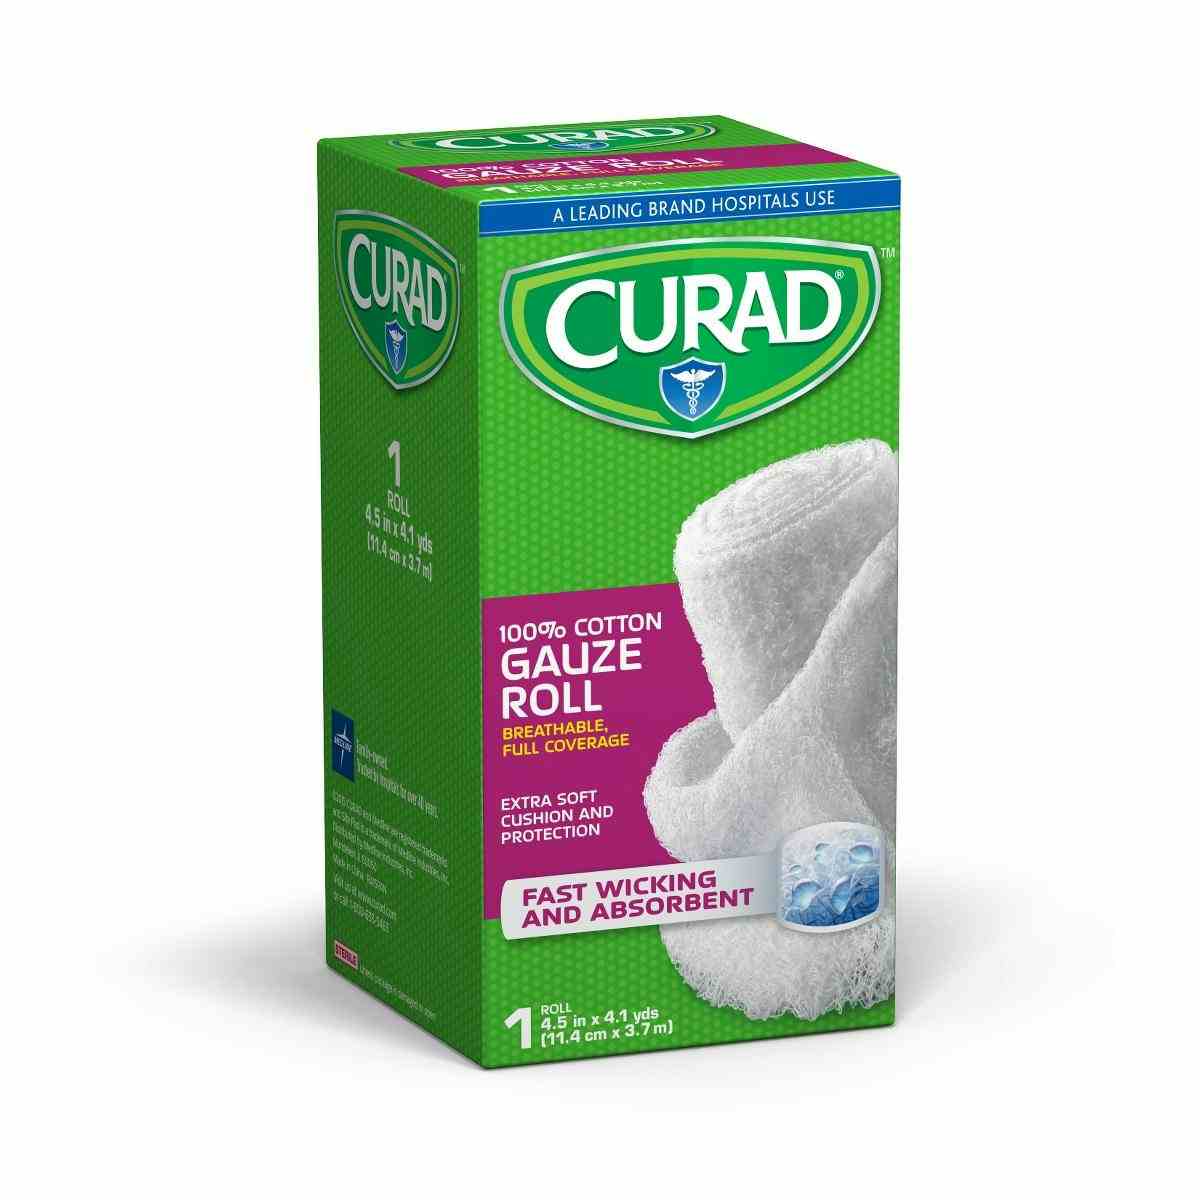 Curad 100% Cotton Gauze Roll, 4.5" X 4 yds
, CUR25865ERB, Case of 24 